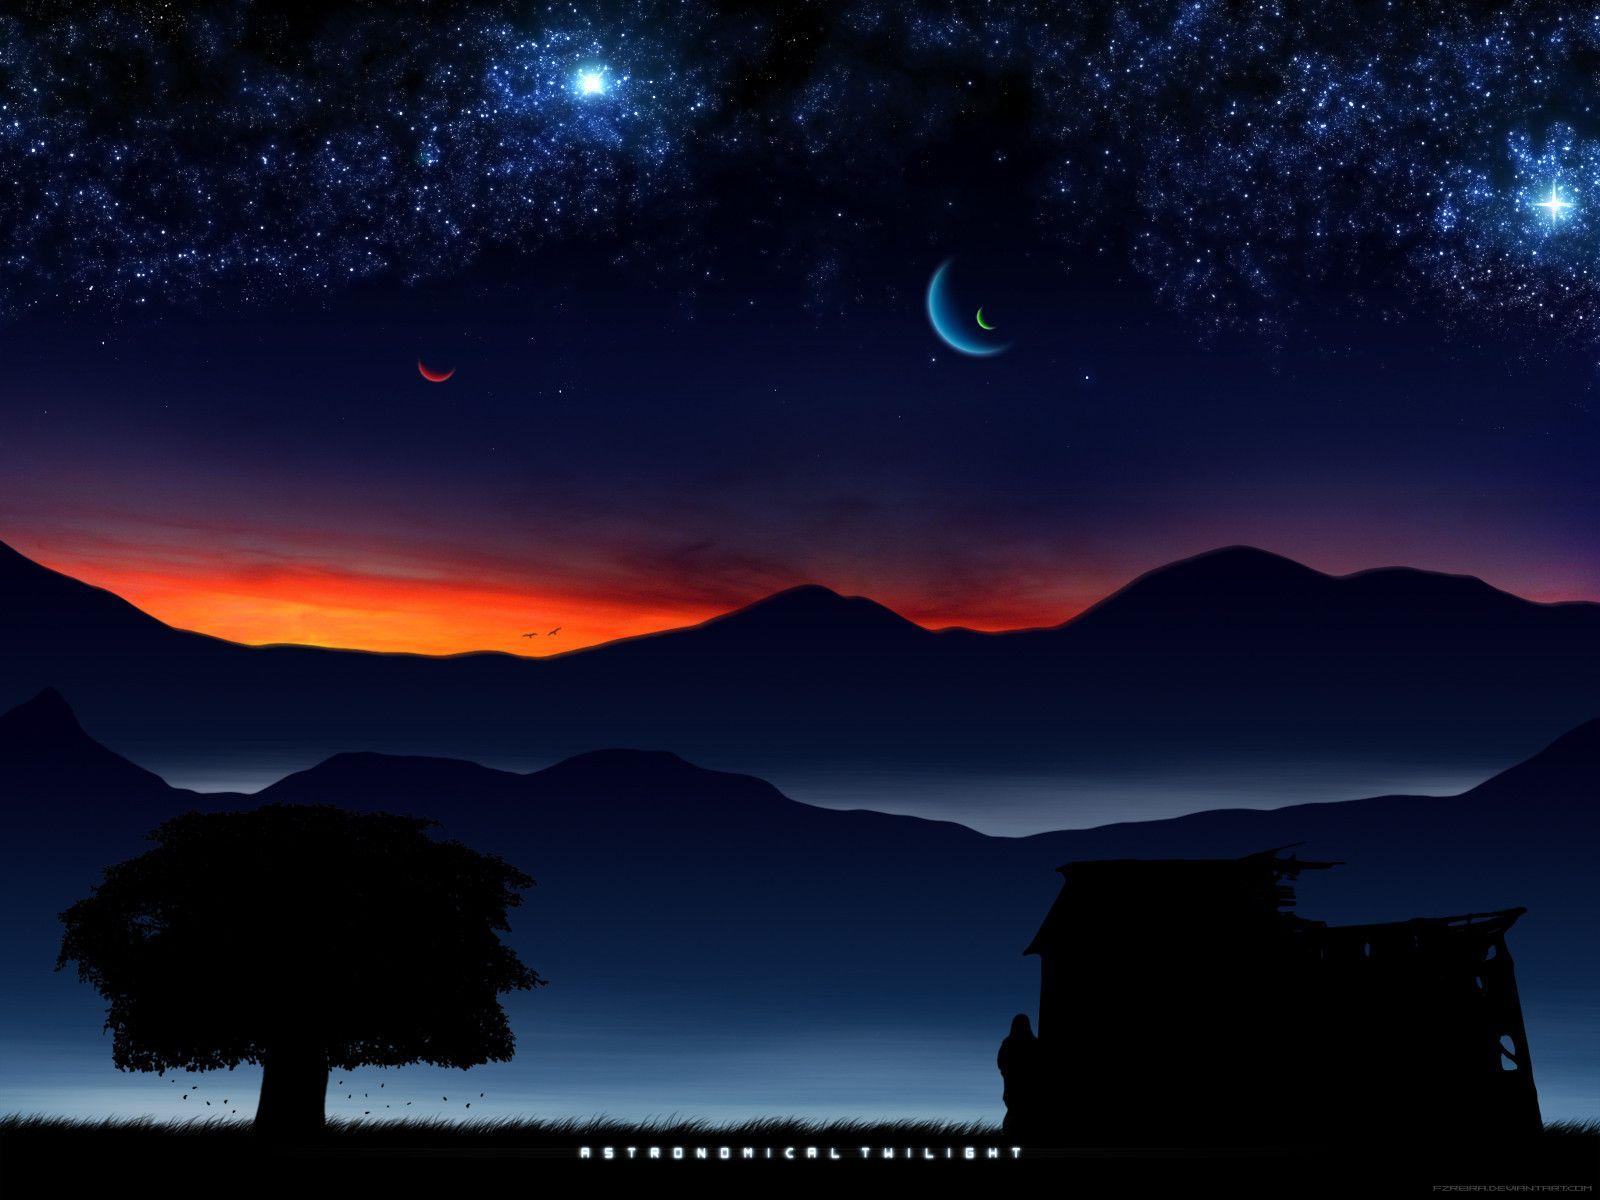 Astronomical Twilight